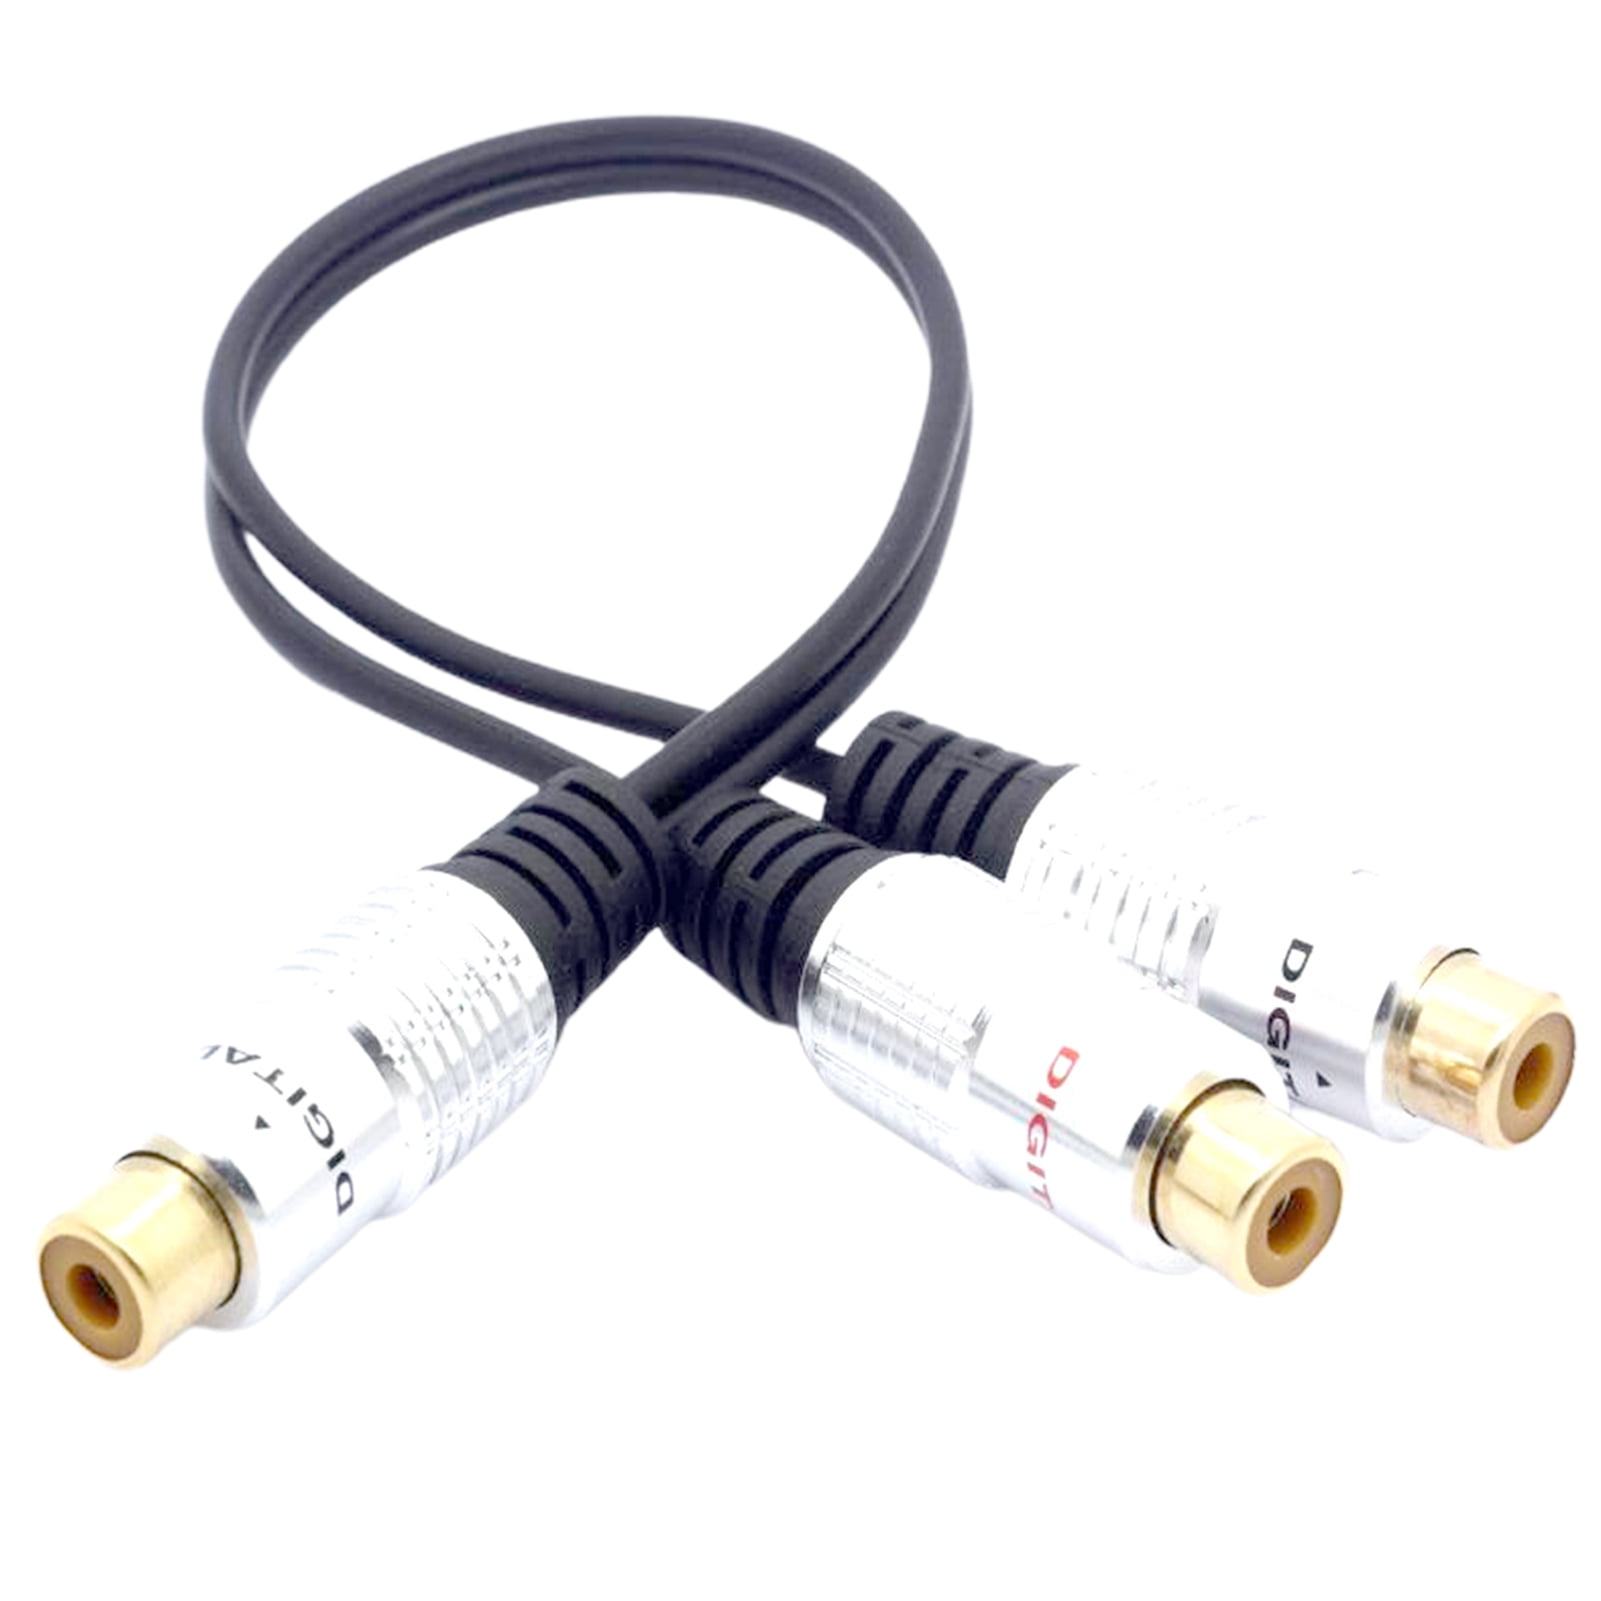 ~3 feet kenable 3.5mm 4 Pole Jack Plug to 3 x RCA Phono Composite & Audio Cable 1m